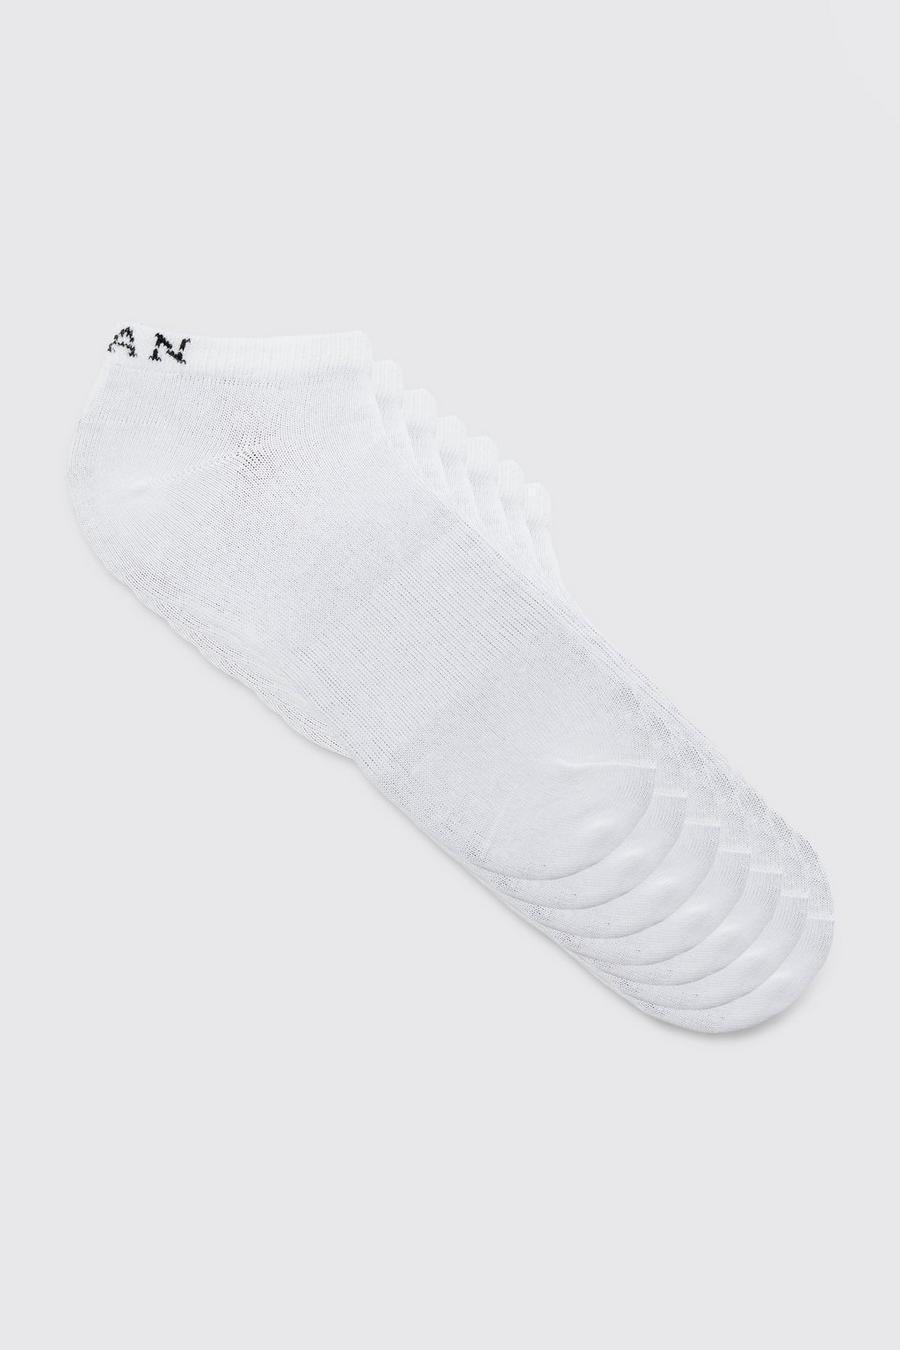 Pack de 7 pares de calcetines MAN deportivos, White blanco